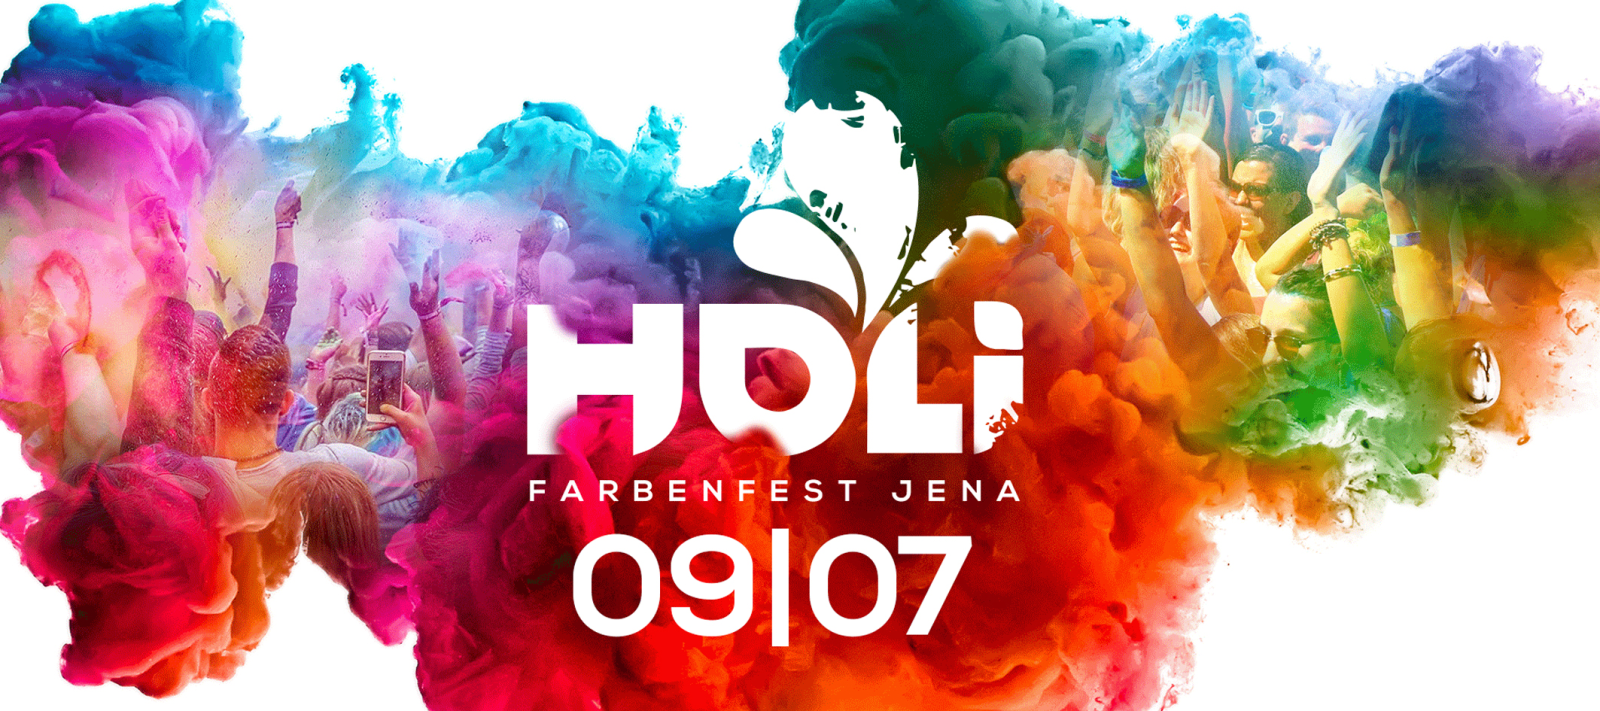 Holi Farbenfest Jena